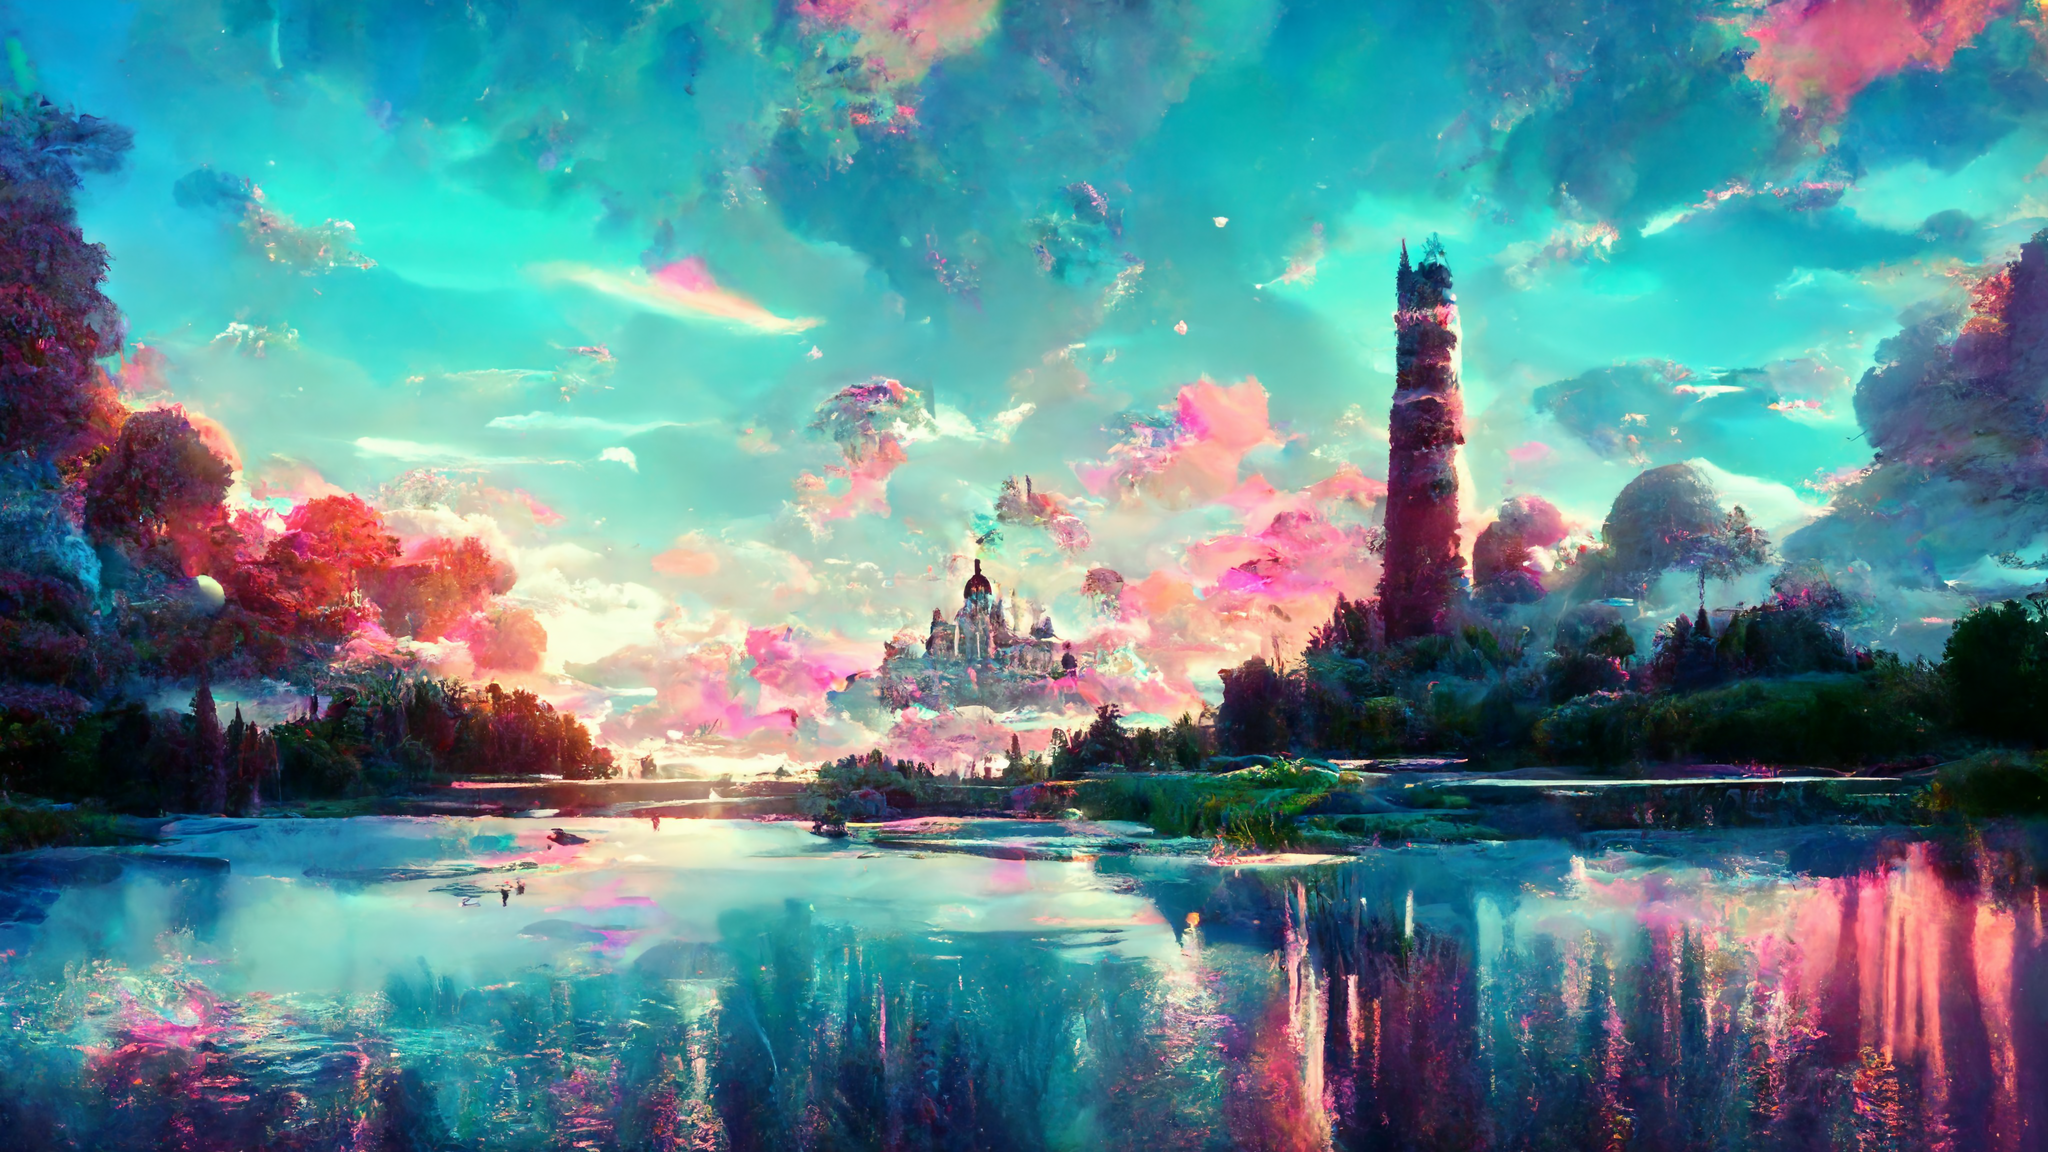 General 2048x1152 fantasy castle lighthouse lake clouds sky neon vaporwave forest AI art